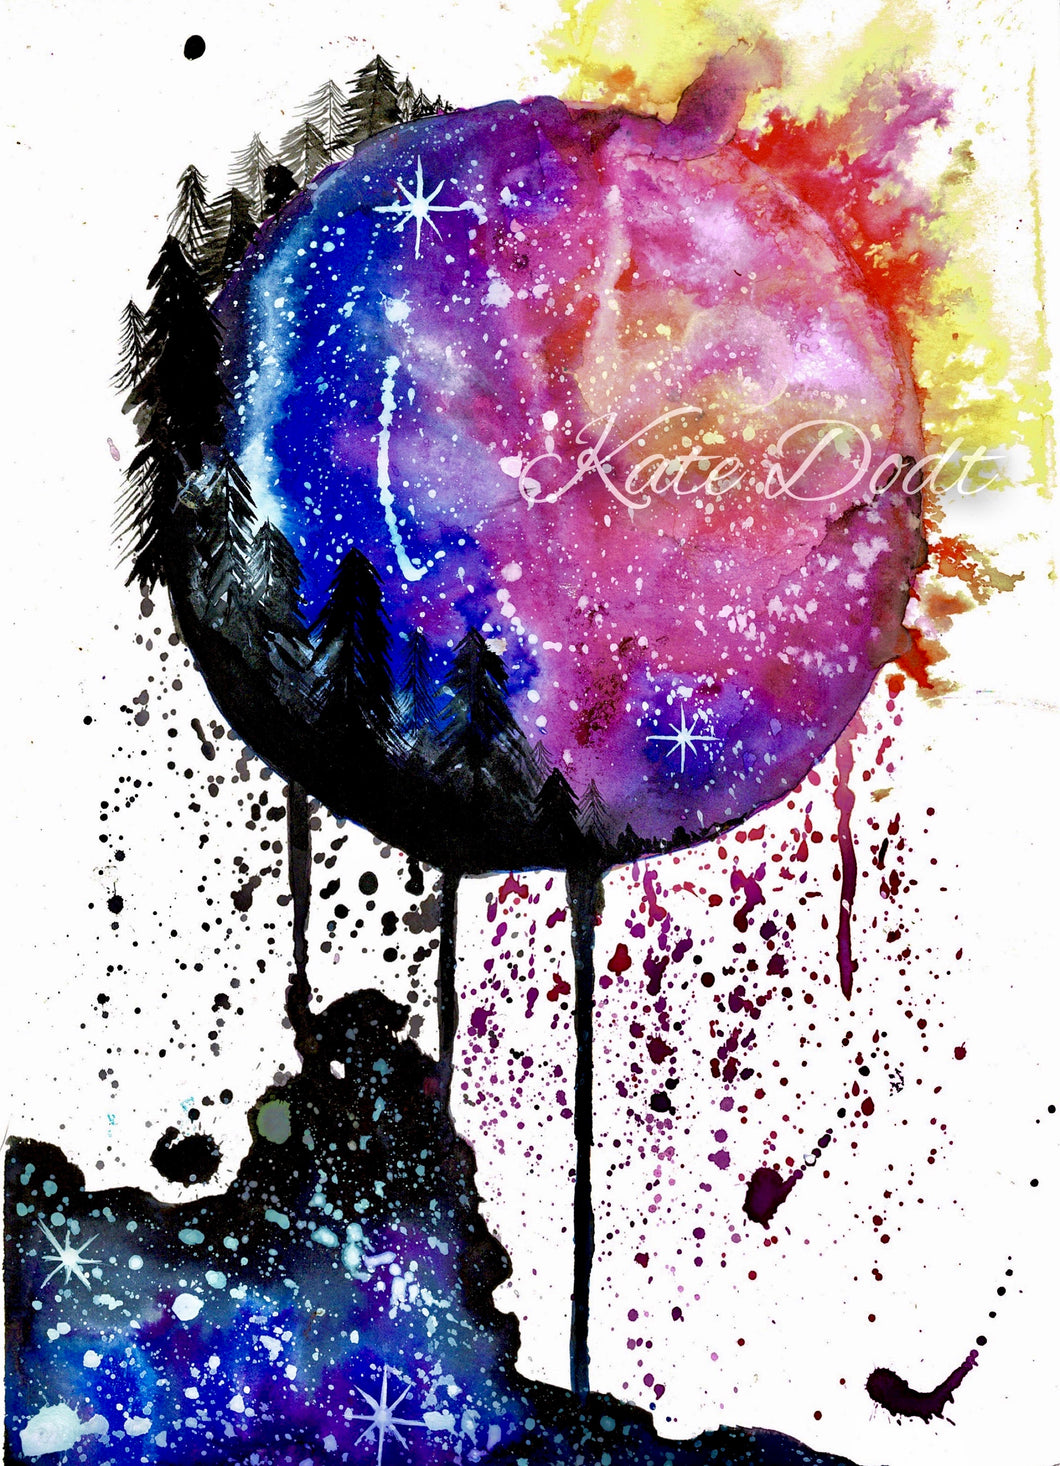 The Galaxy Moon - Art Print